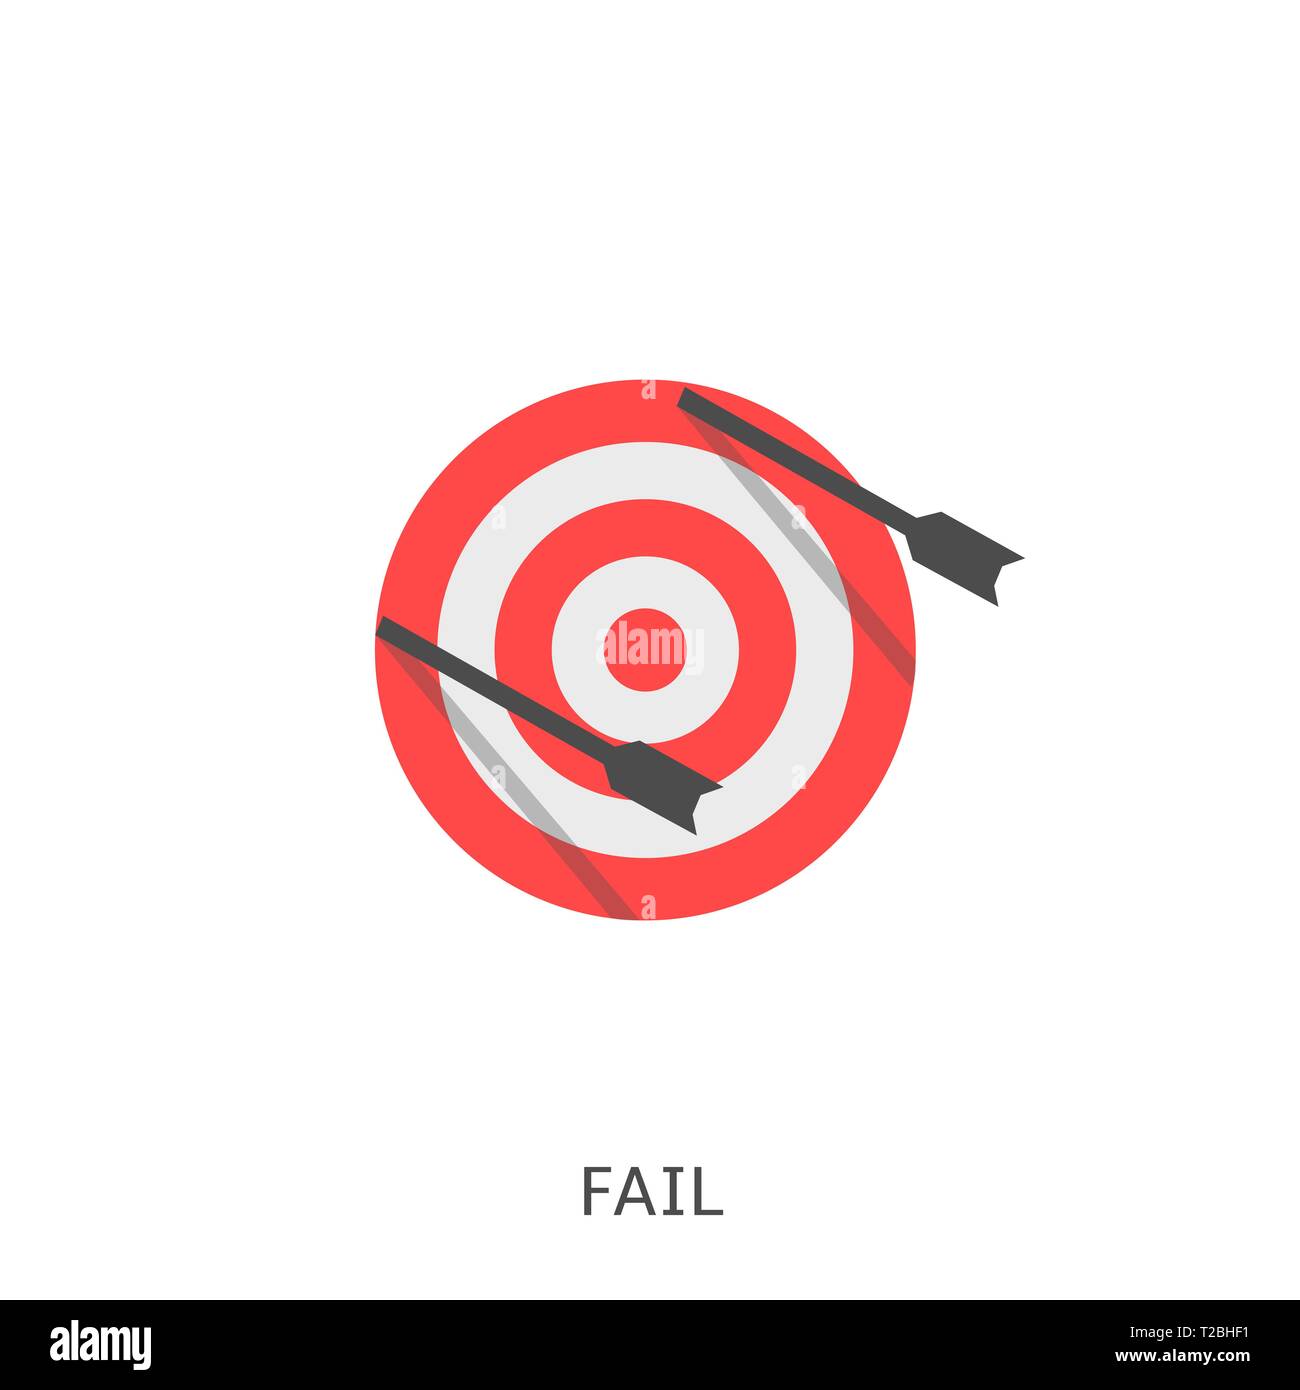 Fail Arrows With Miss Archery Target Vector Illustration Stock Vector